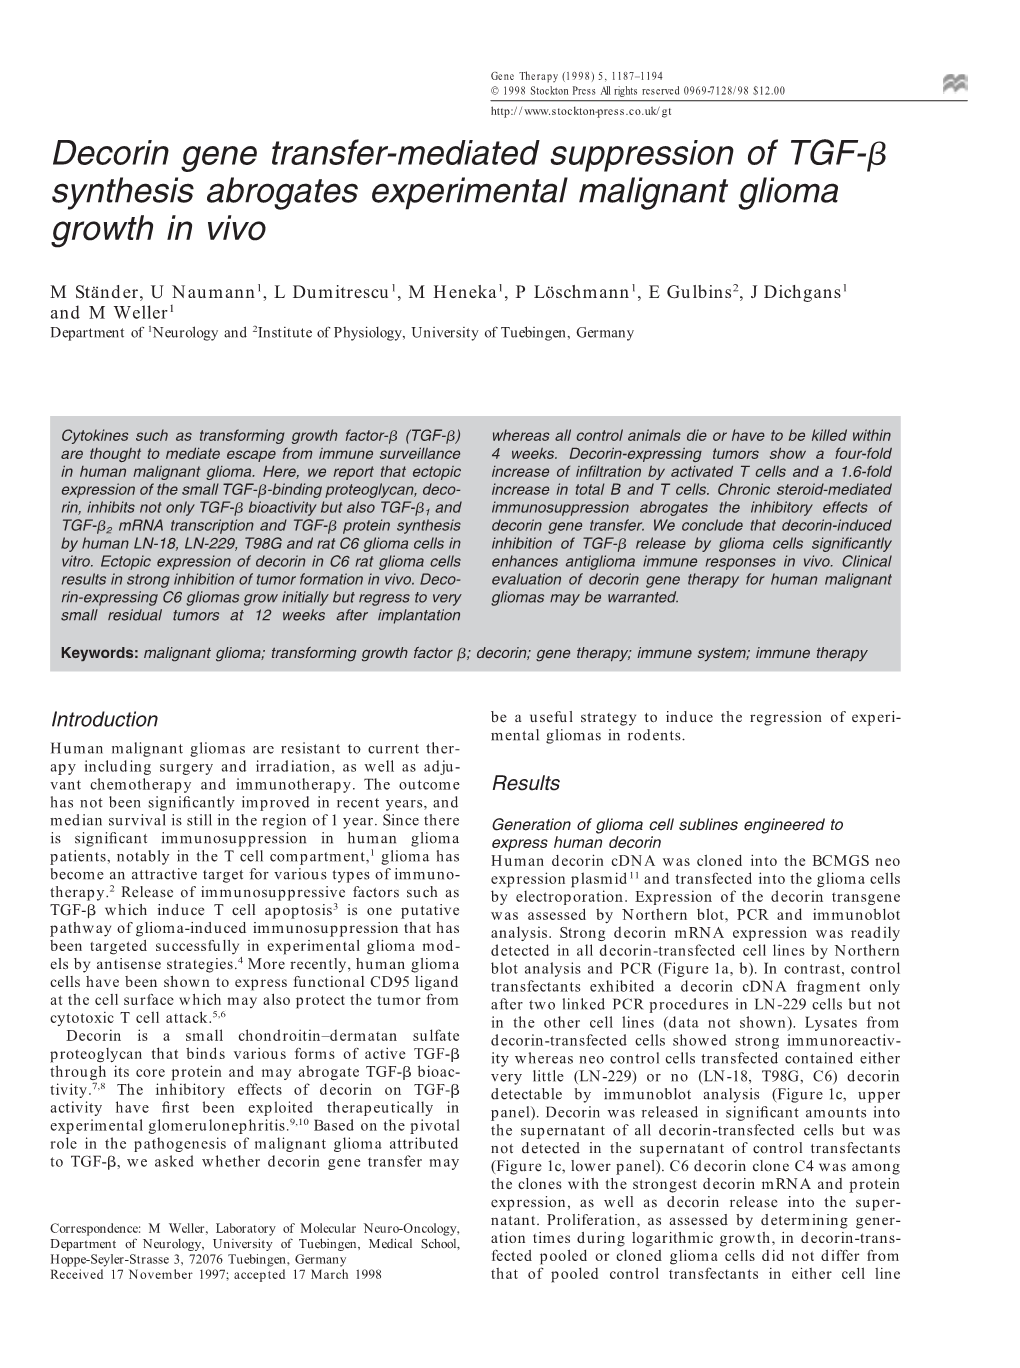 Decorin Gene Transfer-Mediated Suppression of TGF-␤ Synthesis Abrogates Experimental Malignant Glioma Growth in Vivo